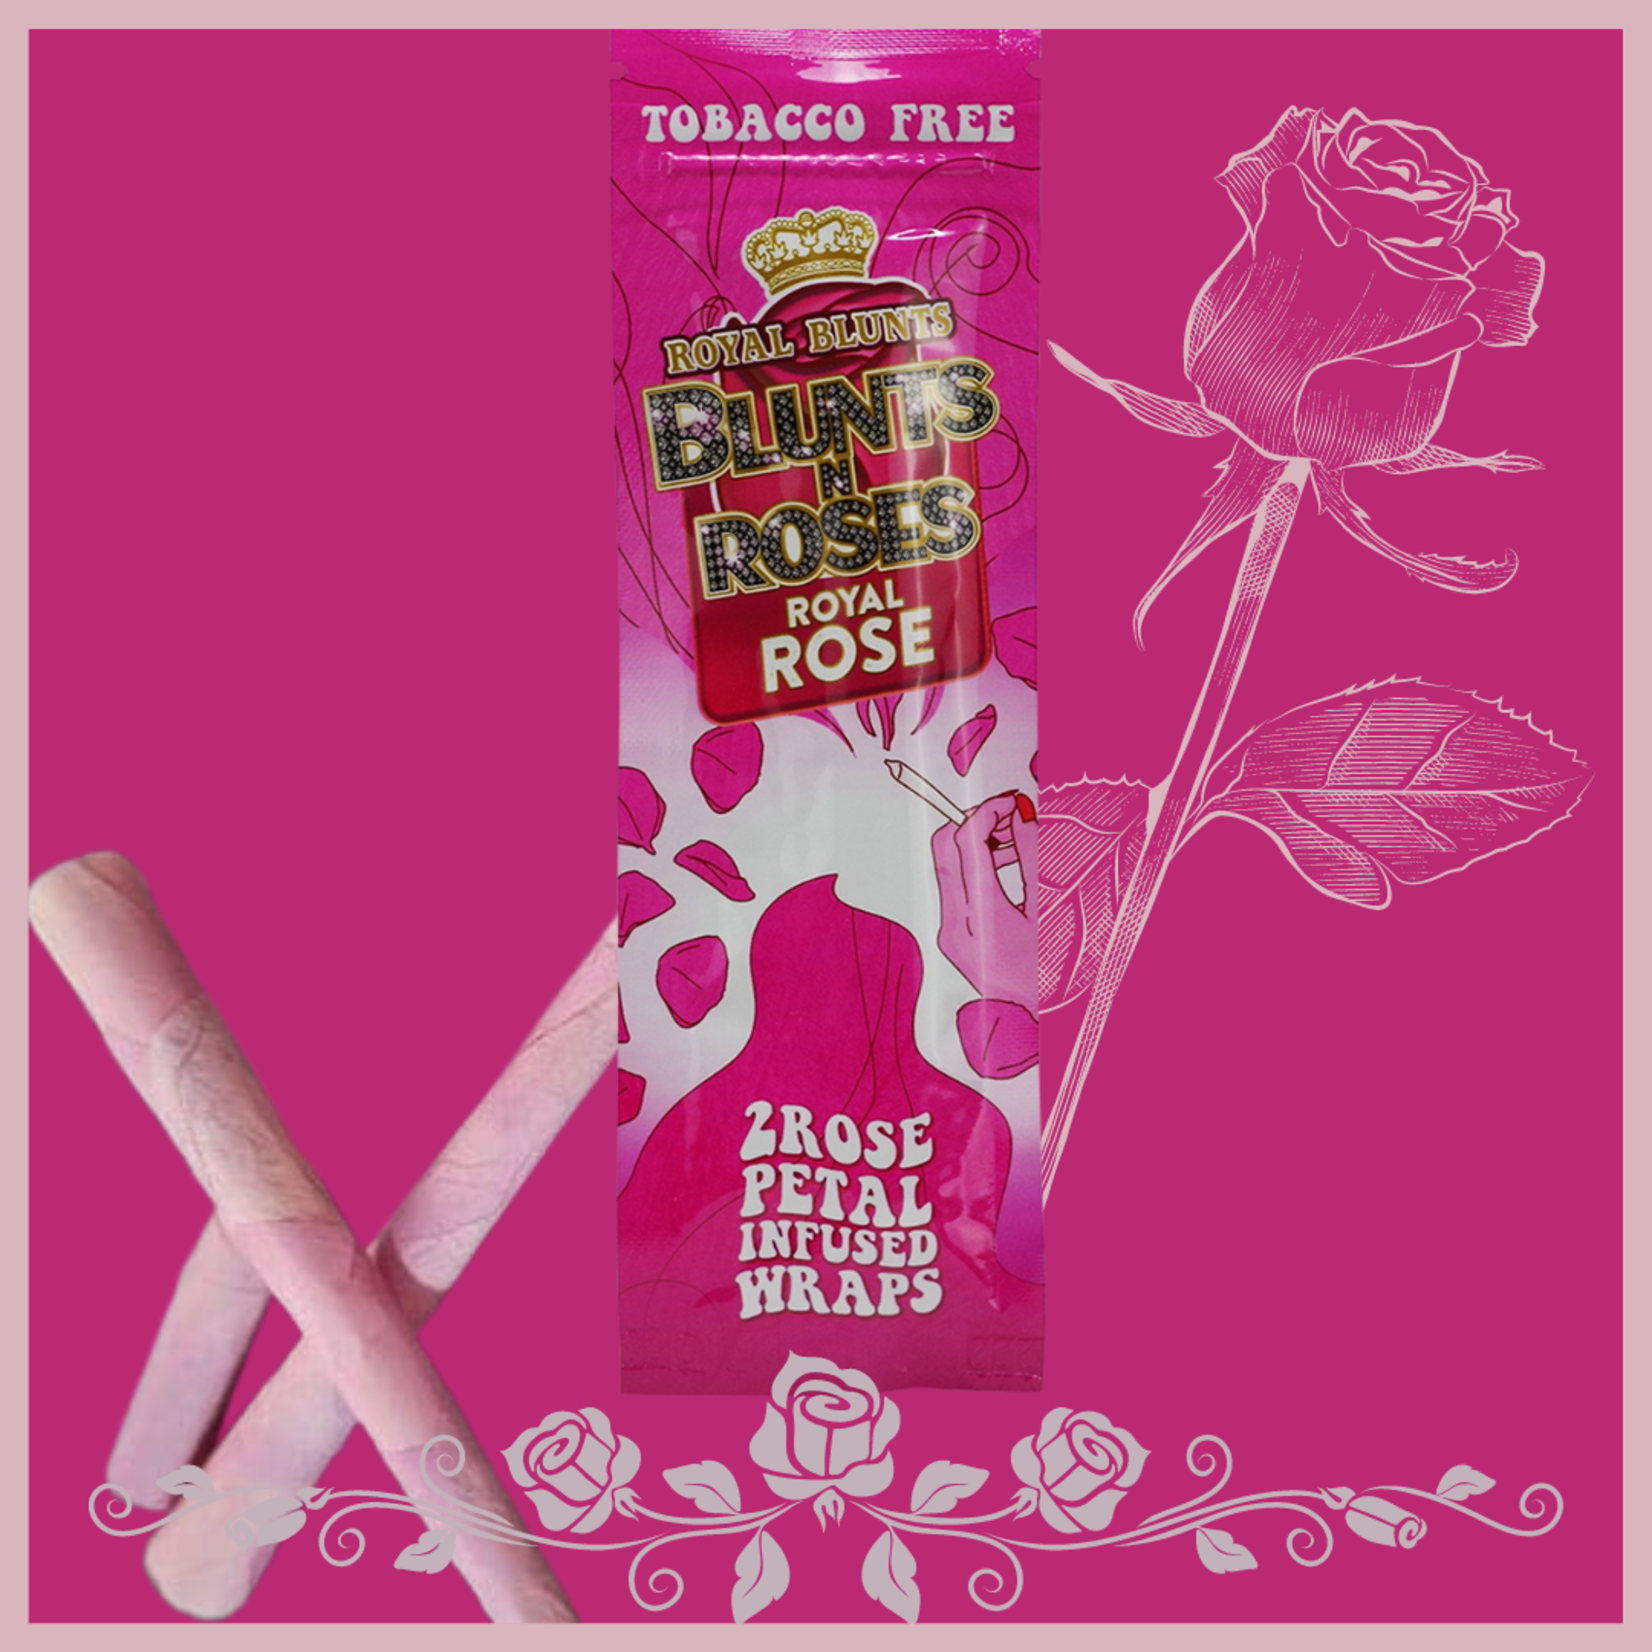 Royal Blunts Blunts & Roses (Rose Petal Infused) Wraps - 2ct